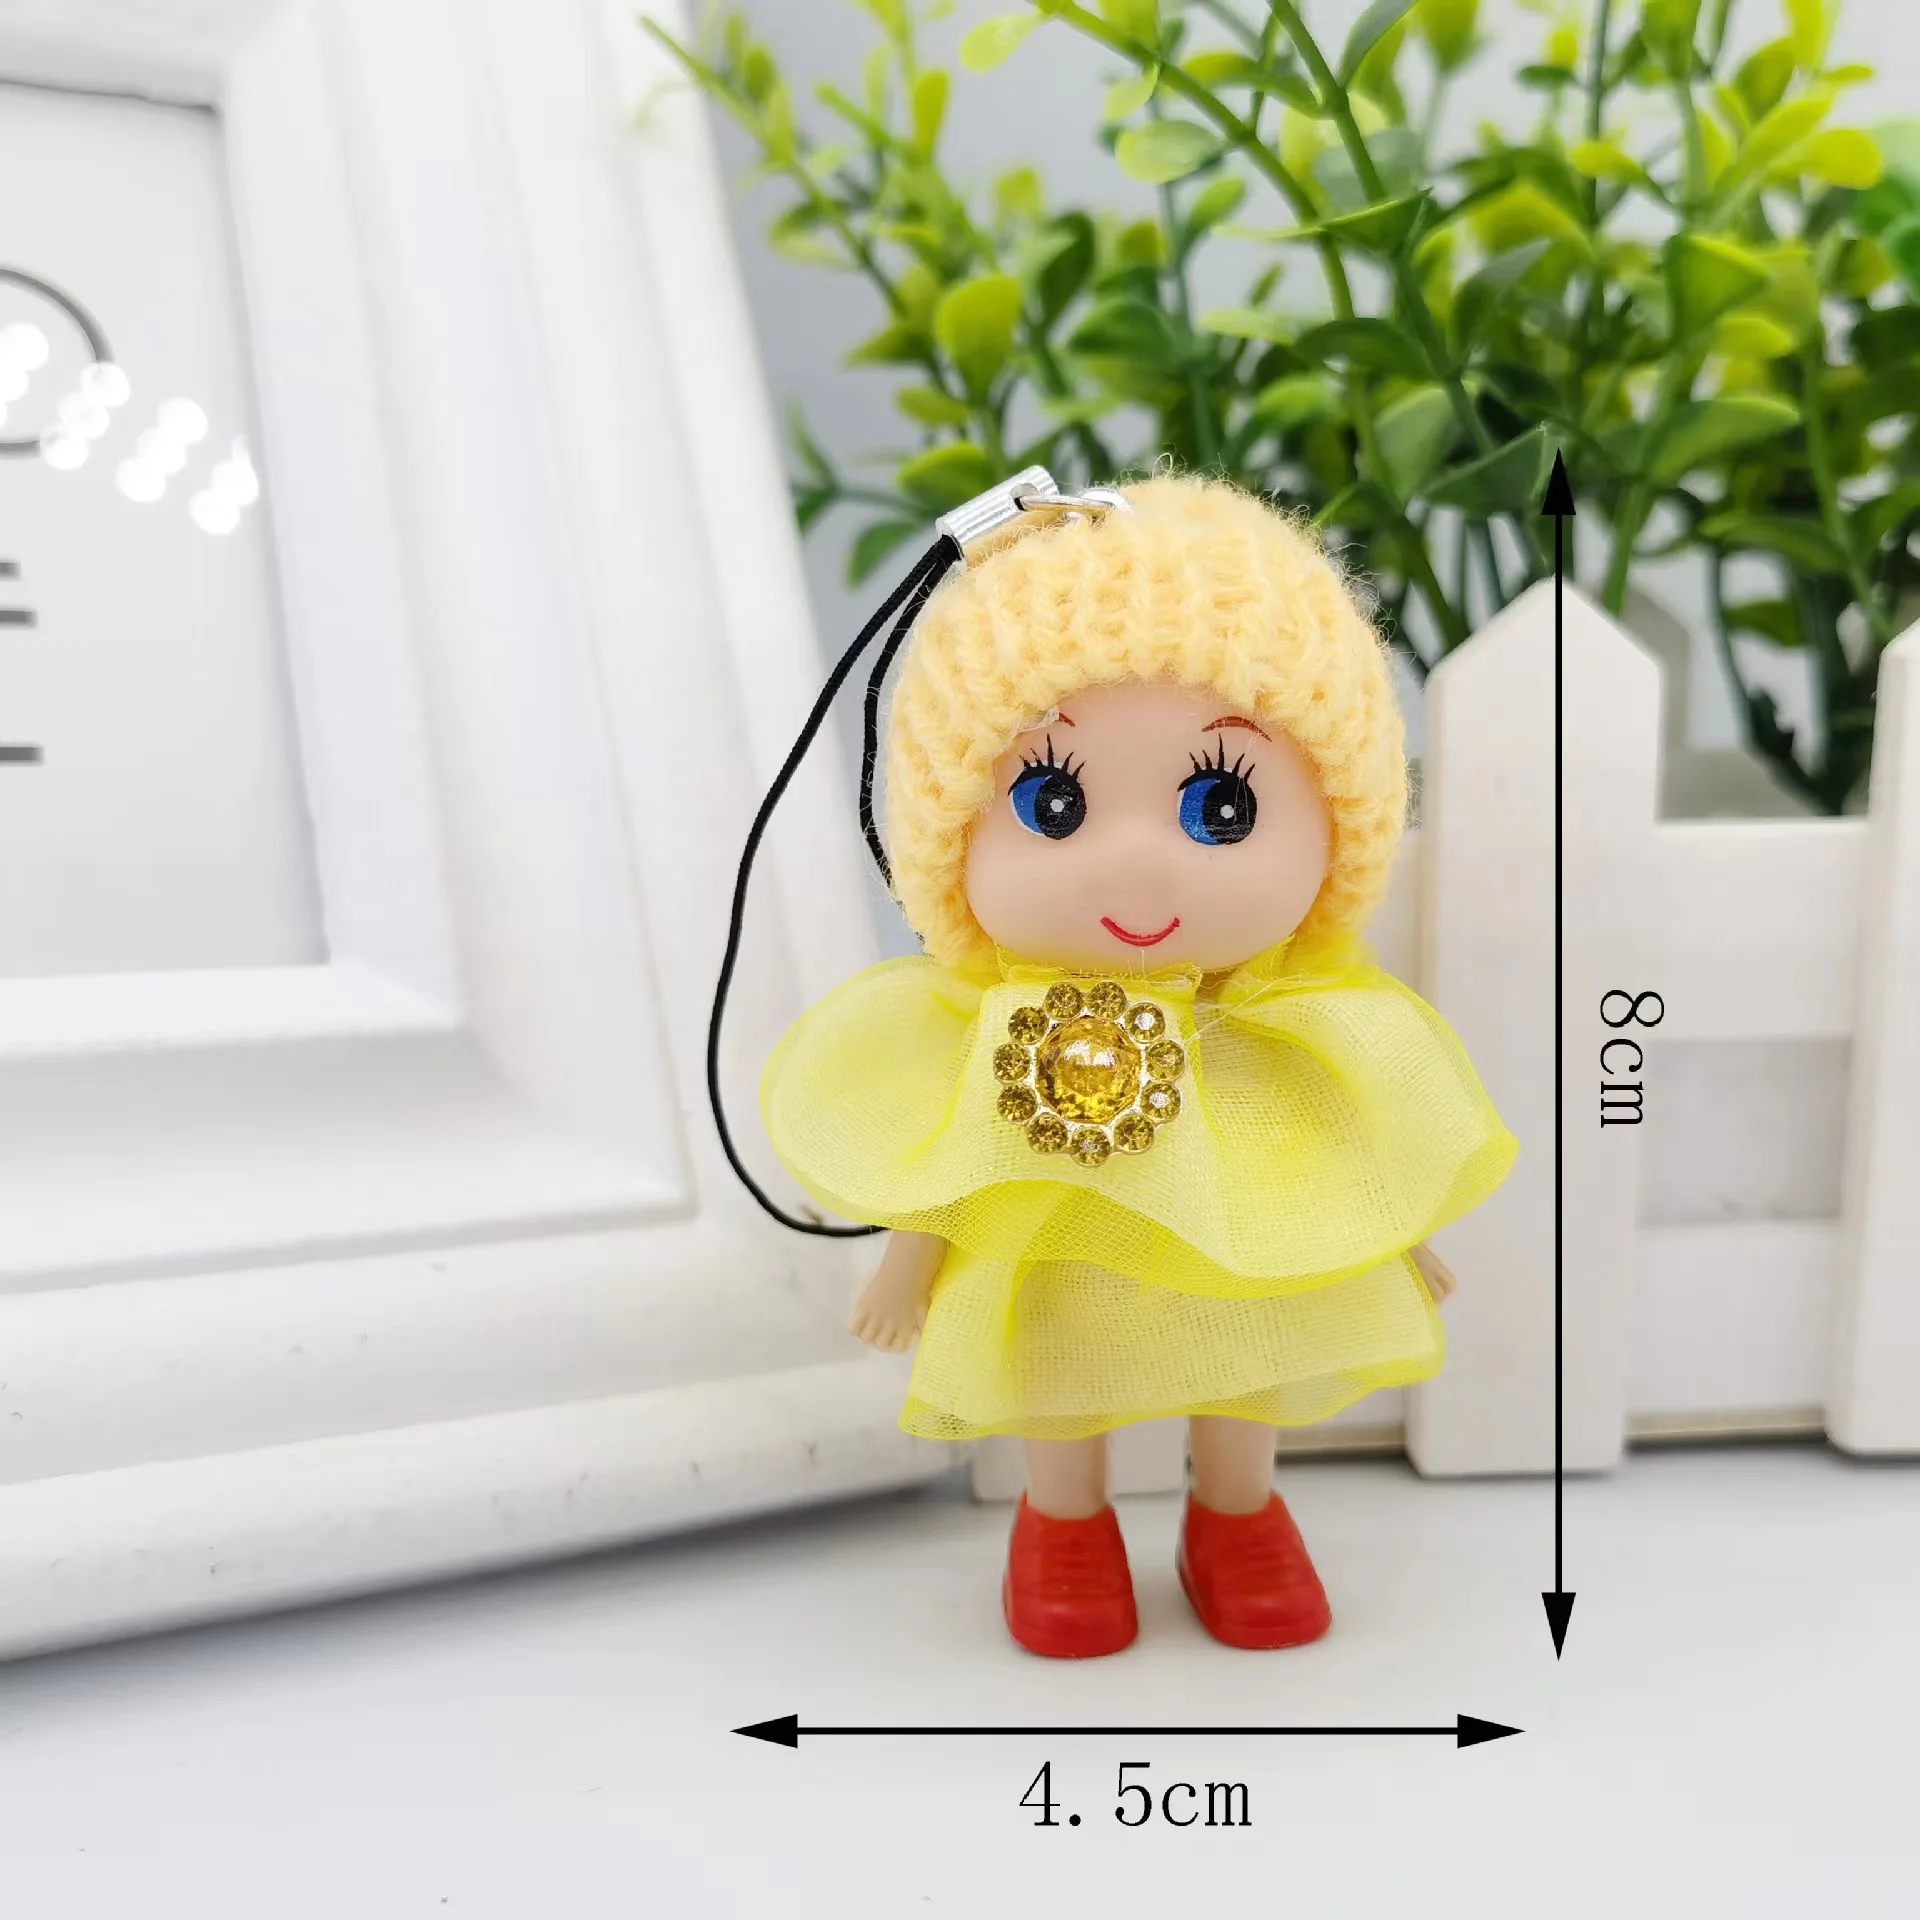 8cm mini hat doll clown mobile phone pendant doll wedding gift vinyl doll